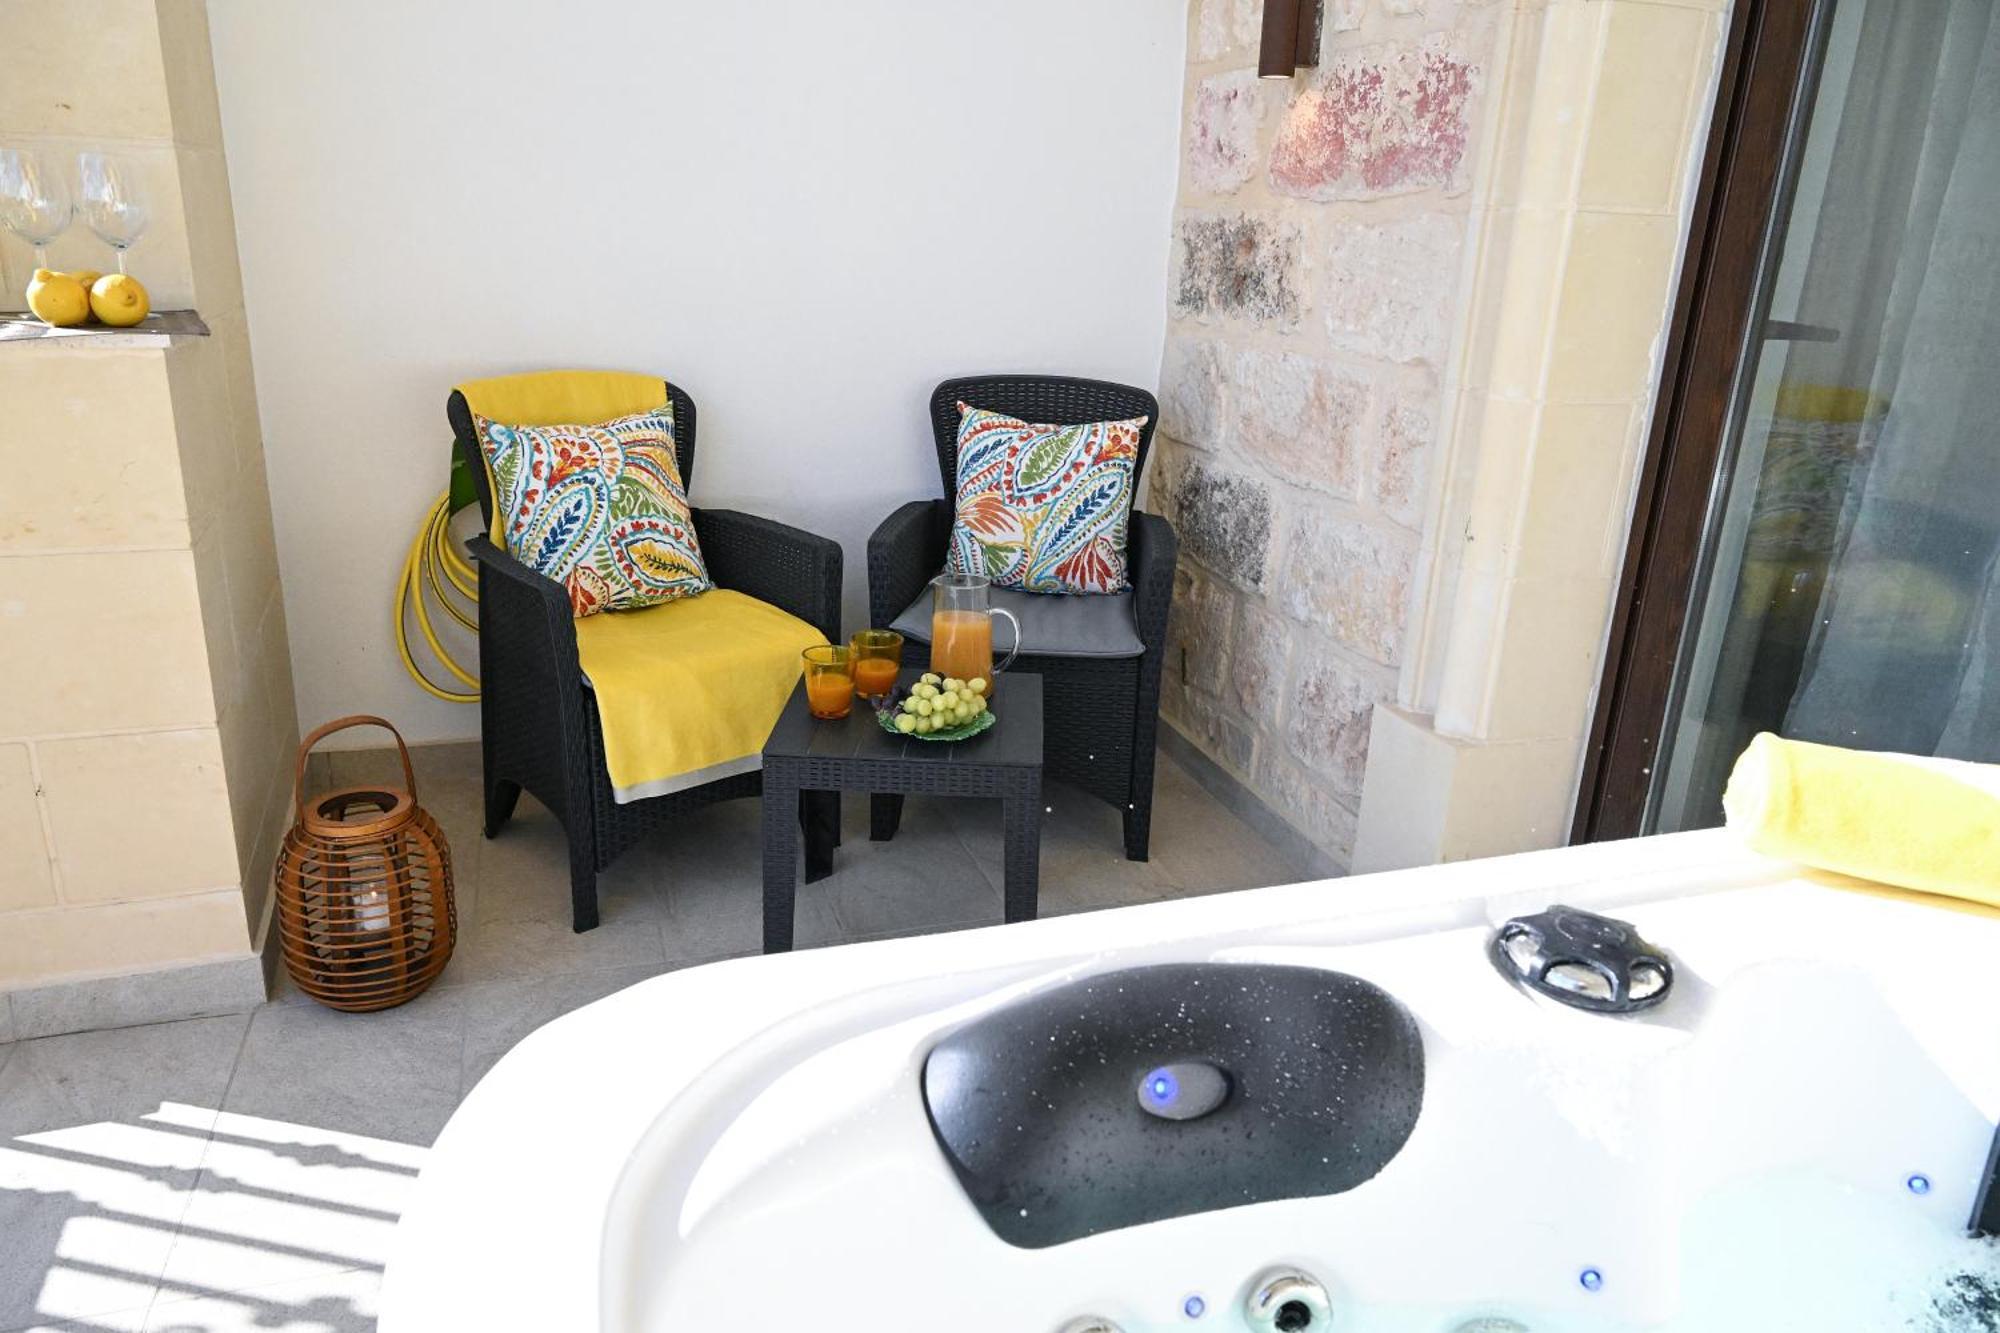 Ta'Lonza Luxury Near Goldenbay With Hot Tub App1 Διαμέρισμα Mellieħa Εξωτερικό φωτογραφία